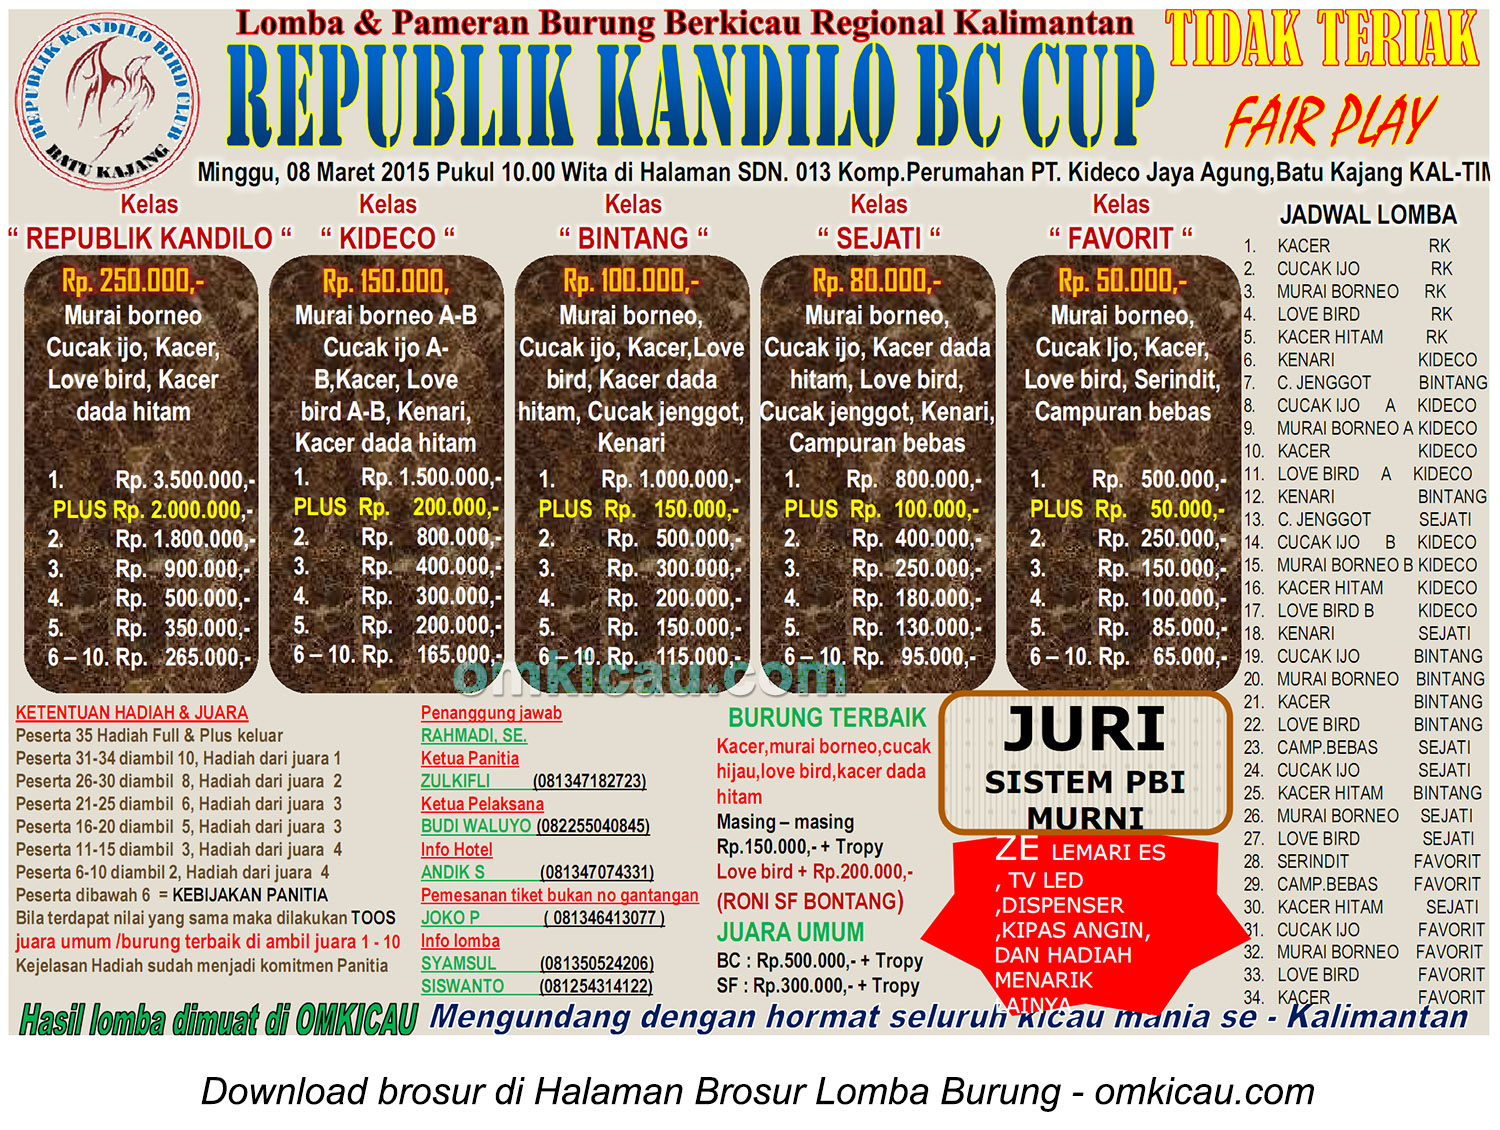 Brosur Lomba Burung Berkicau Republik Kandilo BC Cup, Batu Kajang, 8 Maret 2015